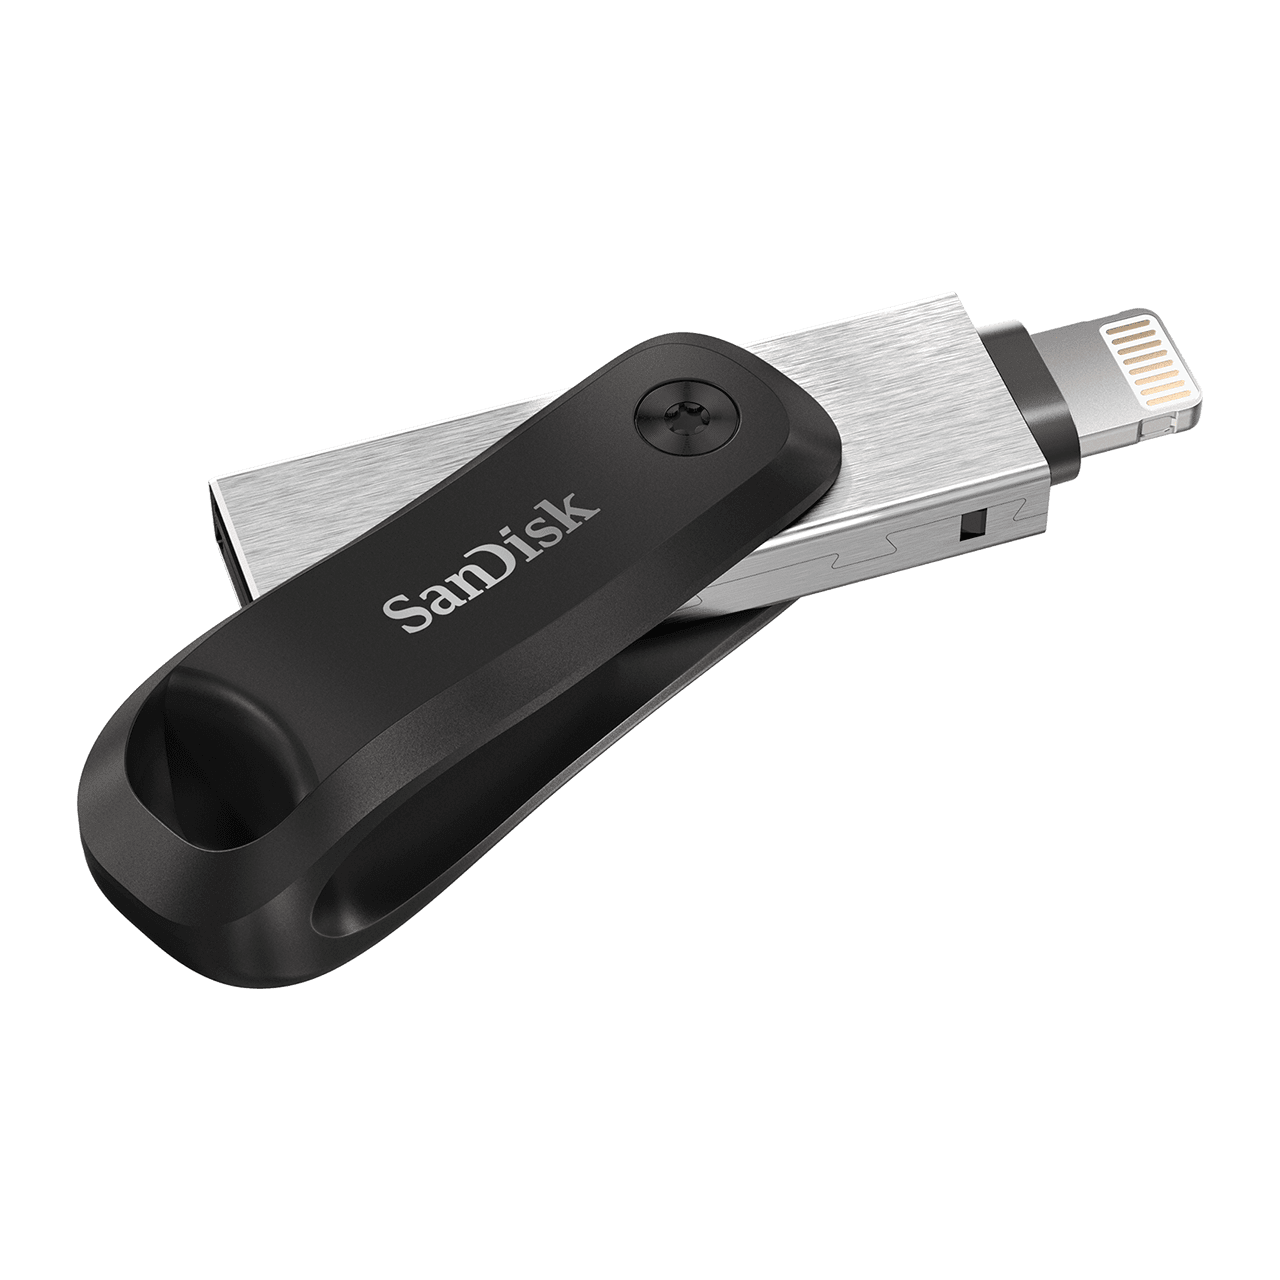 SanDisk iXpand Flash Drive Go 128GB 